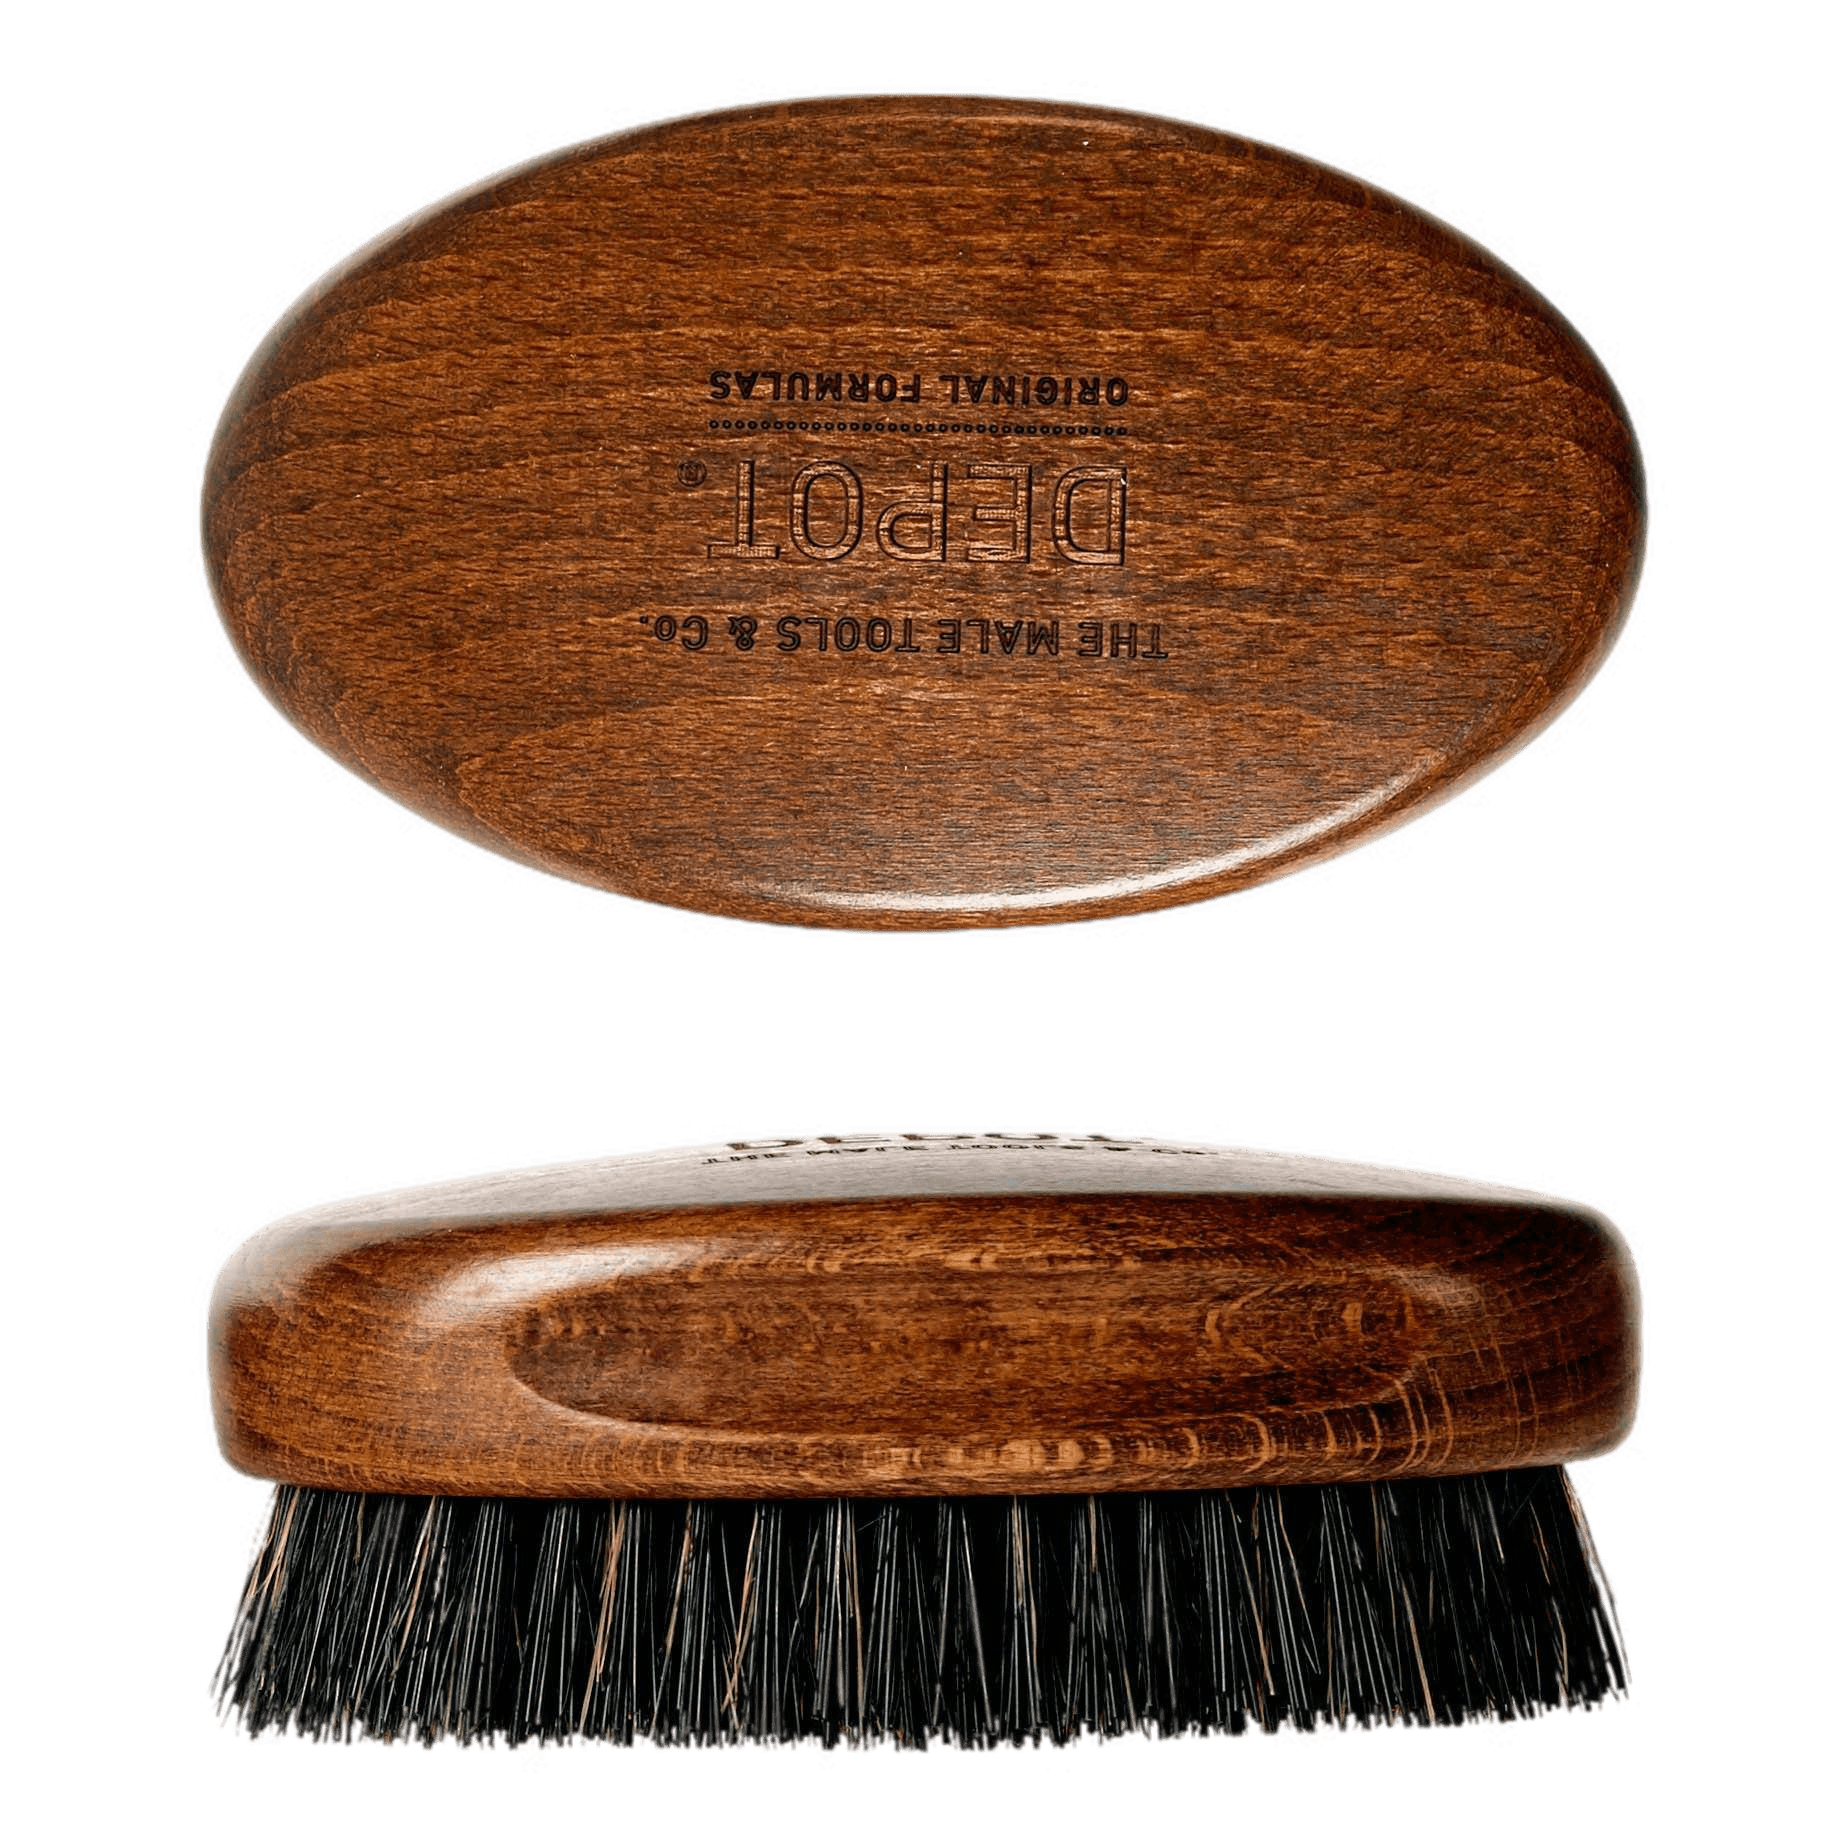 Depot Wooden Beard Brush Large